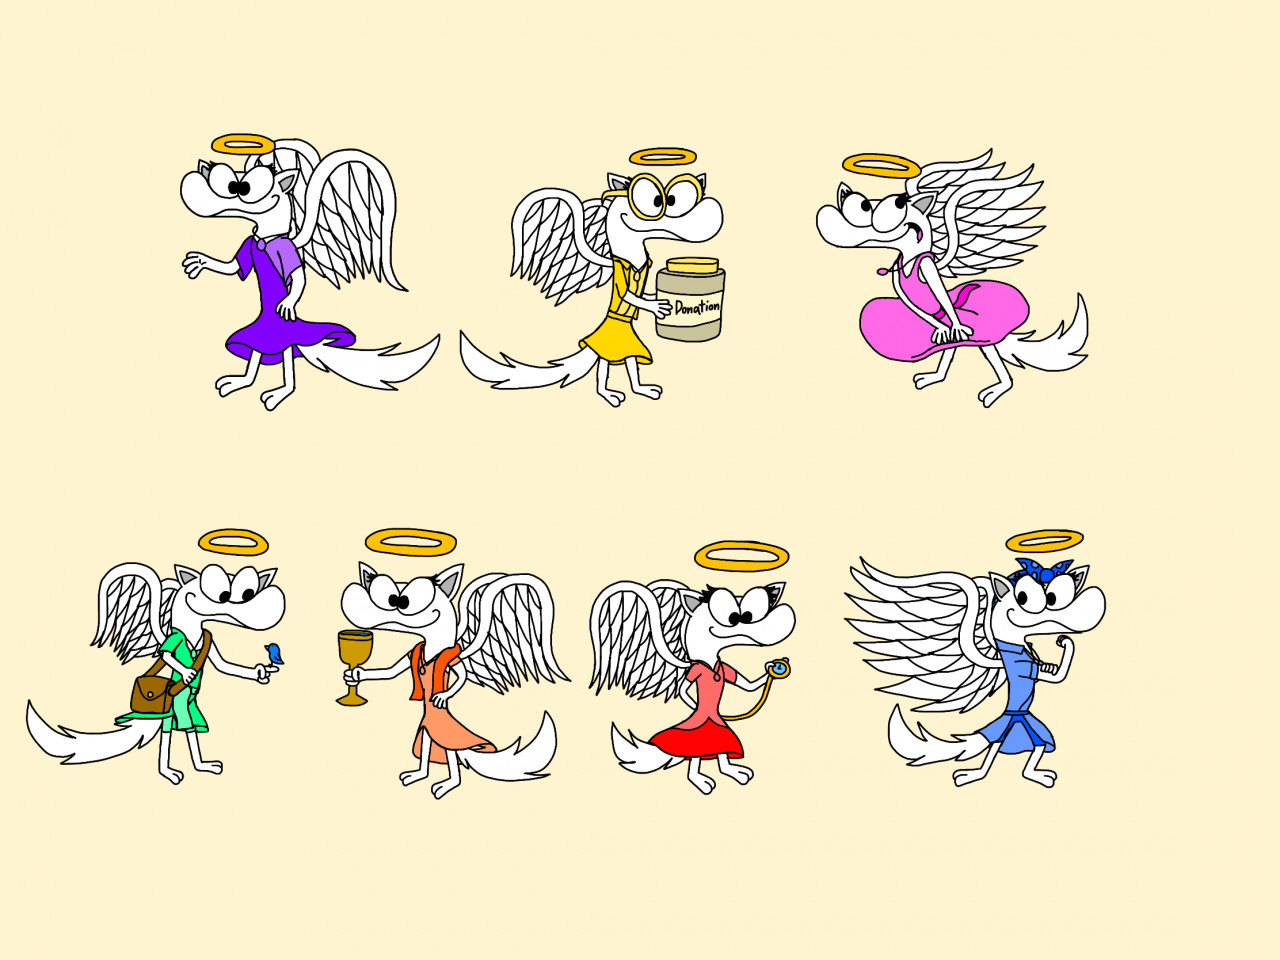 seven heavenly virtues angels